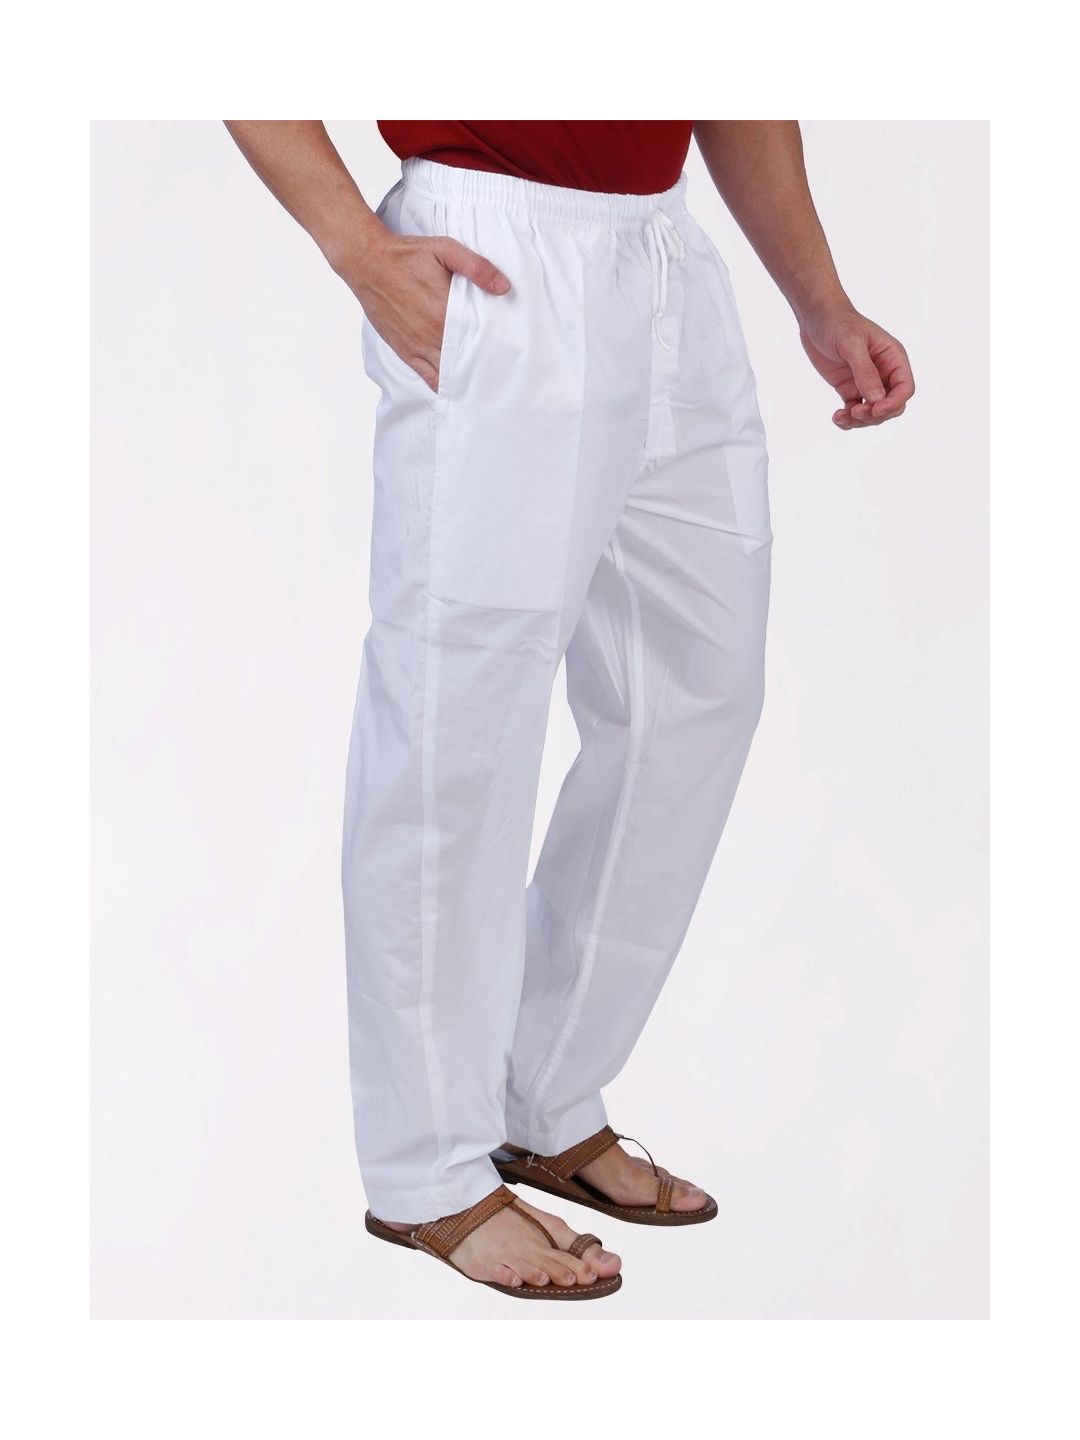 Share 70+ terry cotton pants - in.eteachers